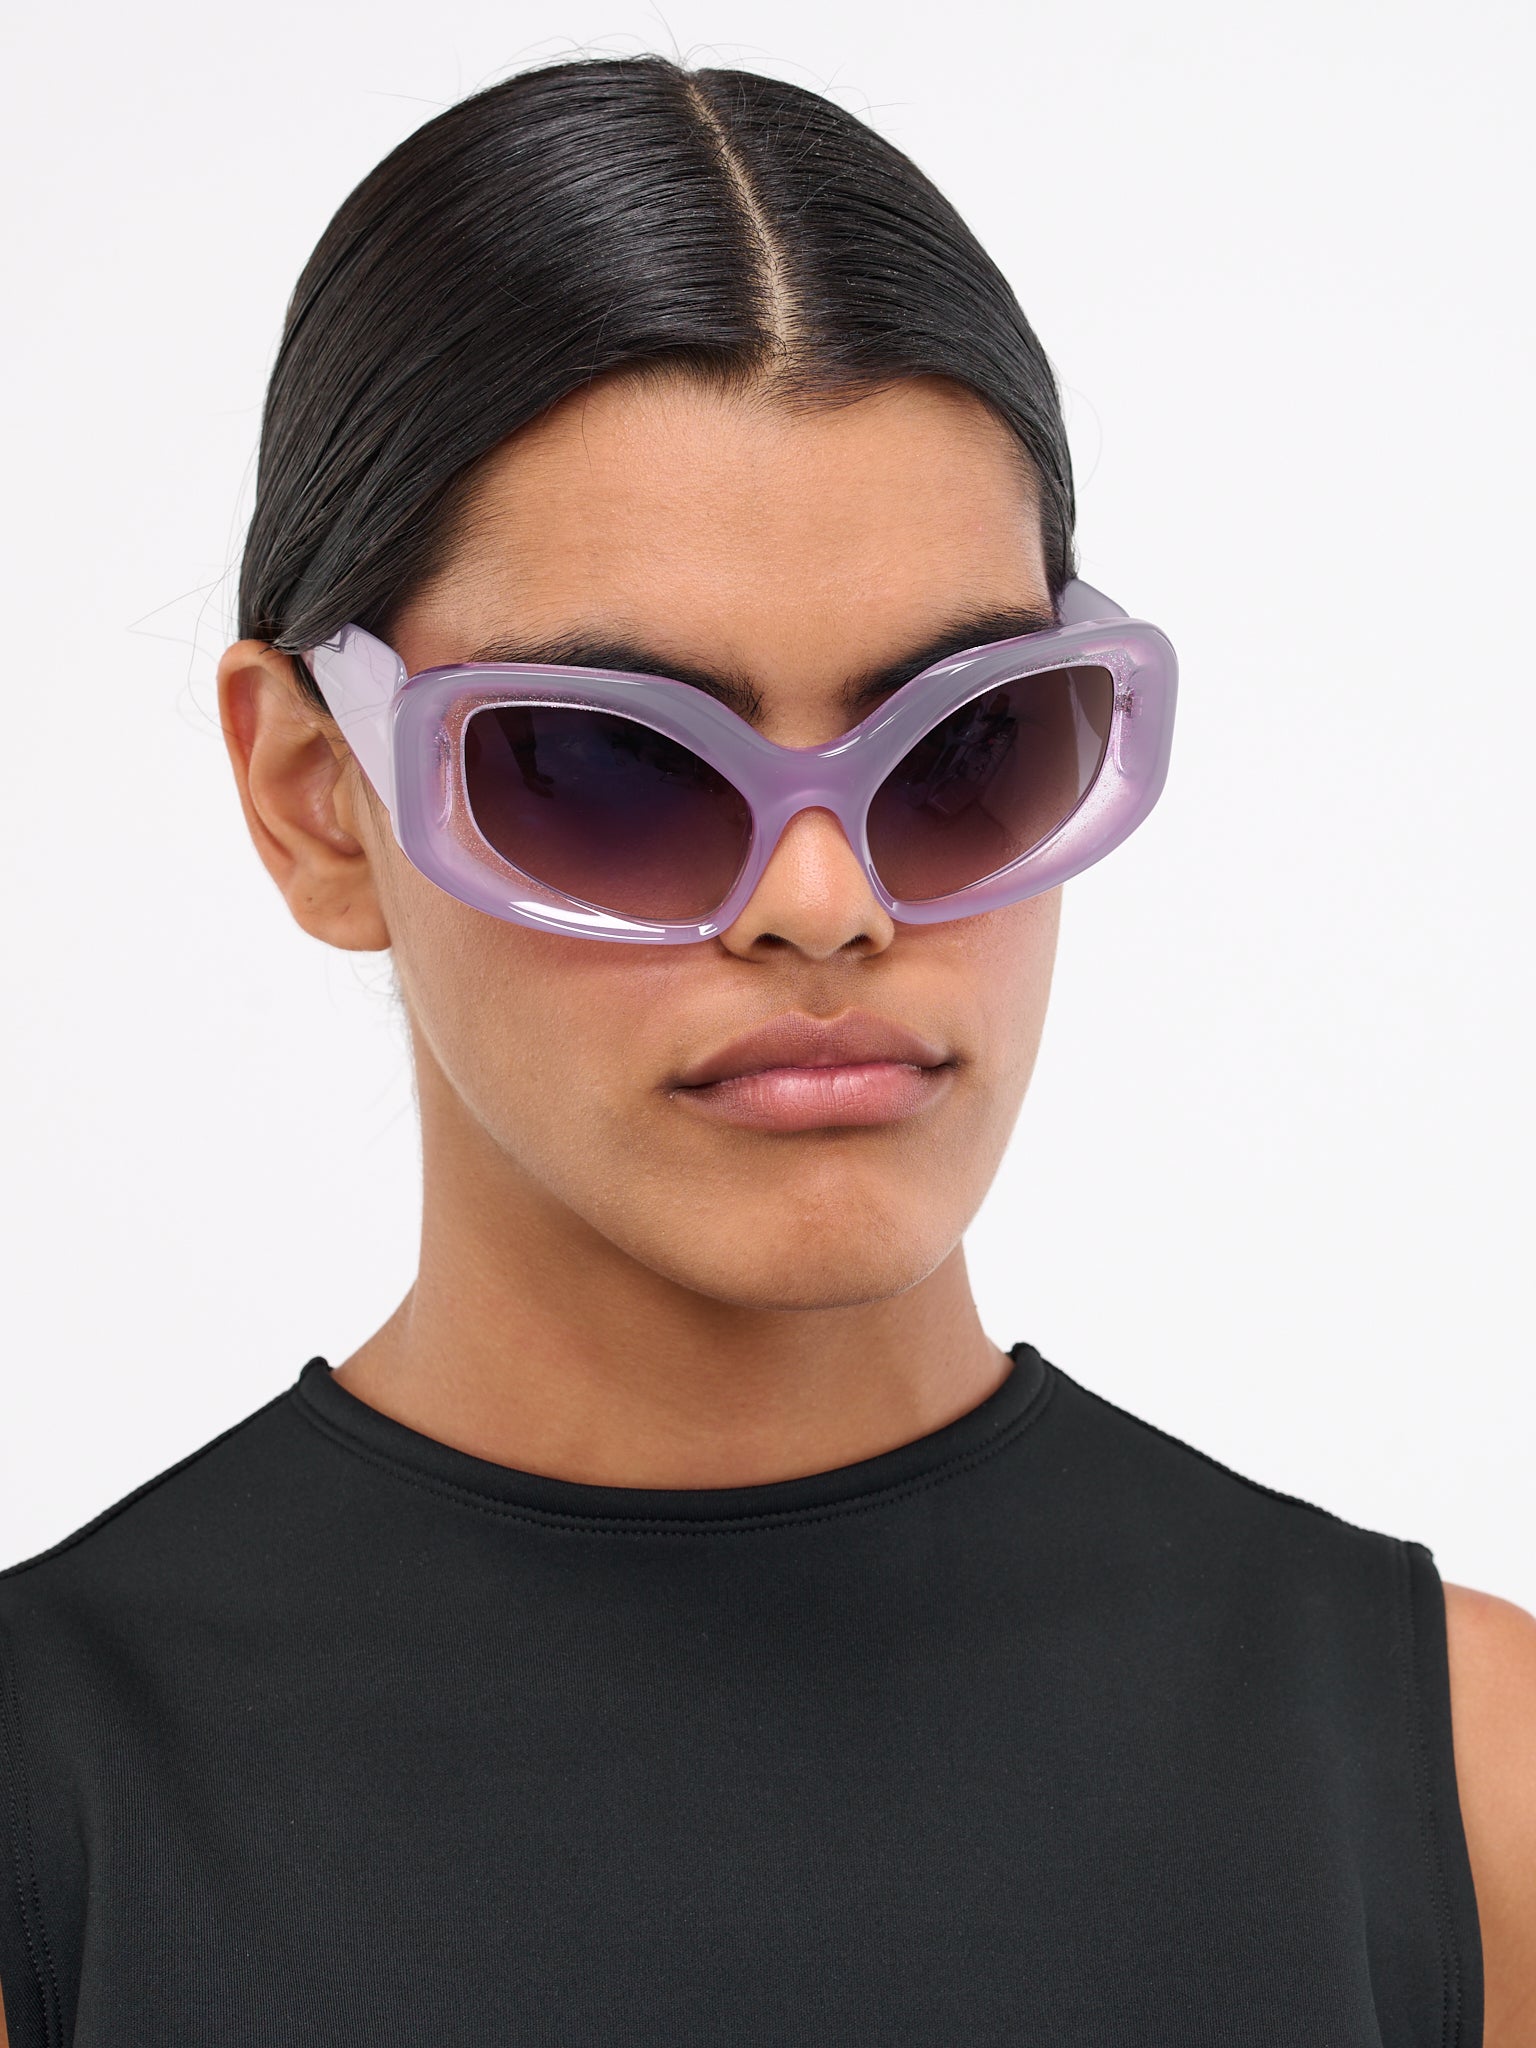 AW Glimmer Sunglasses (GLIMMER-B)